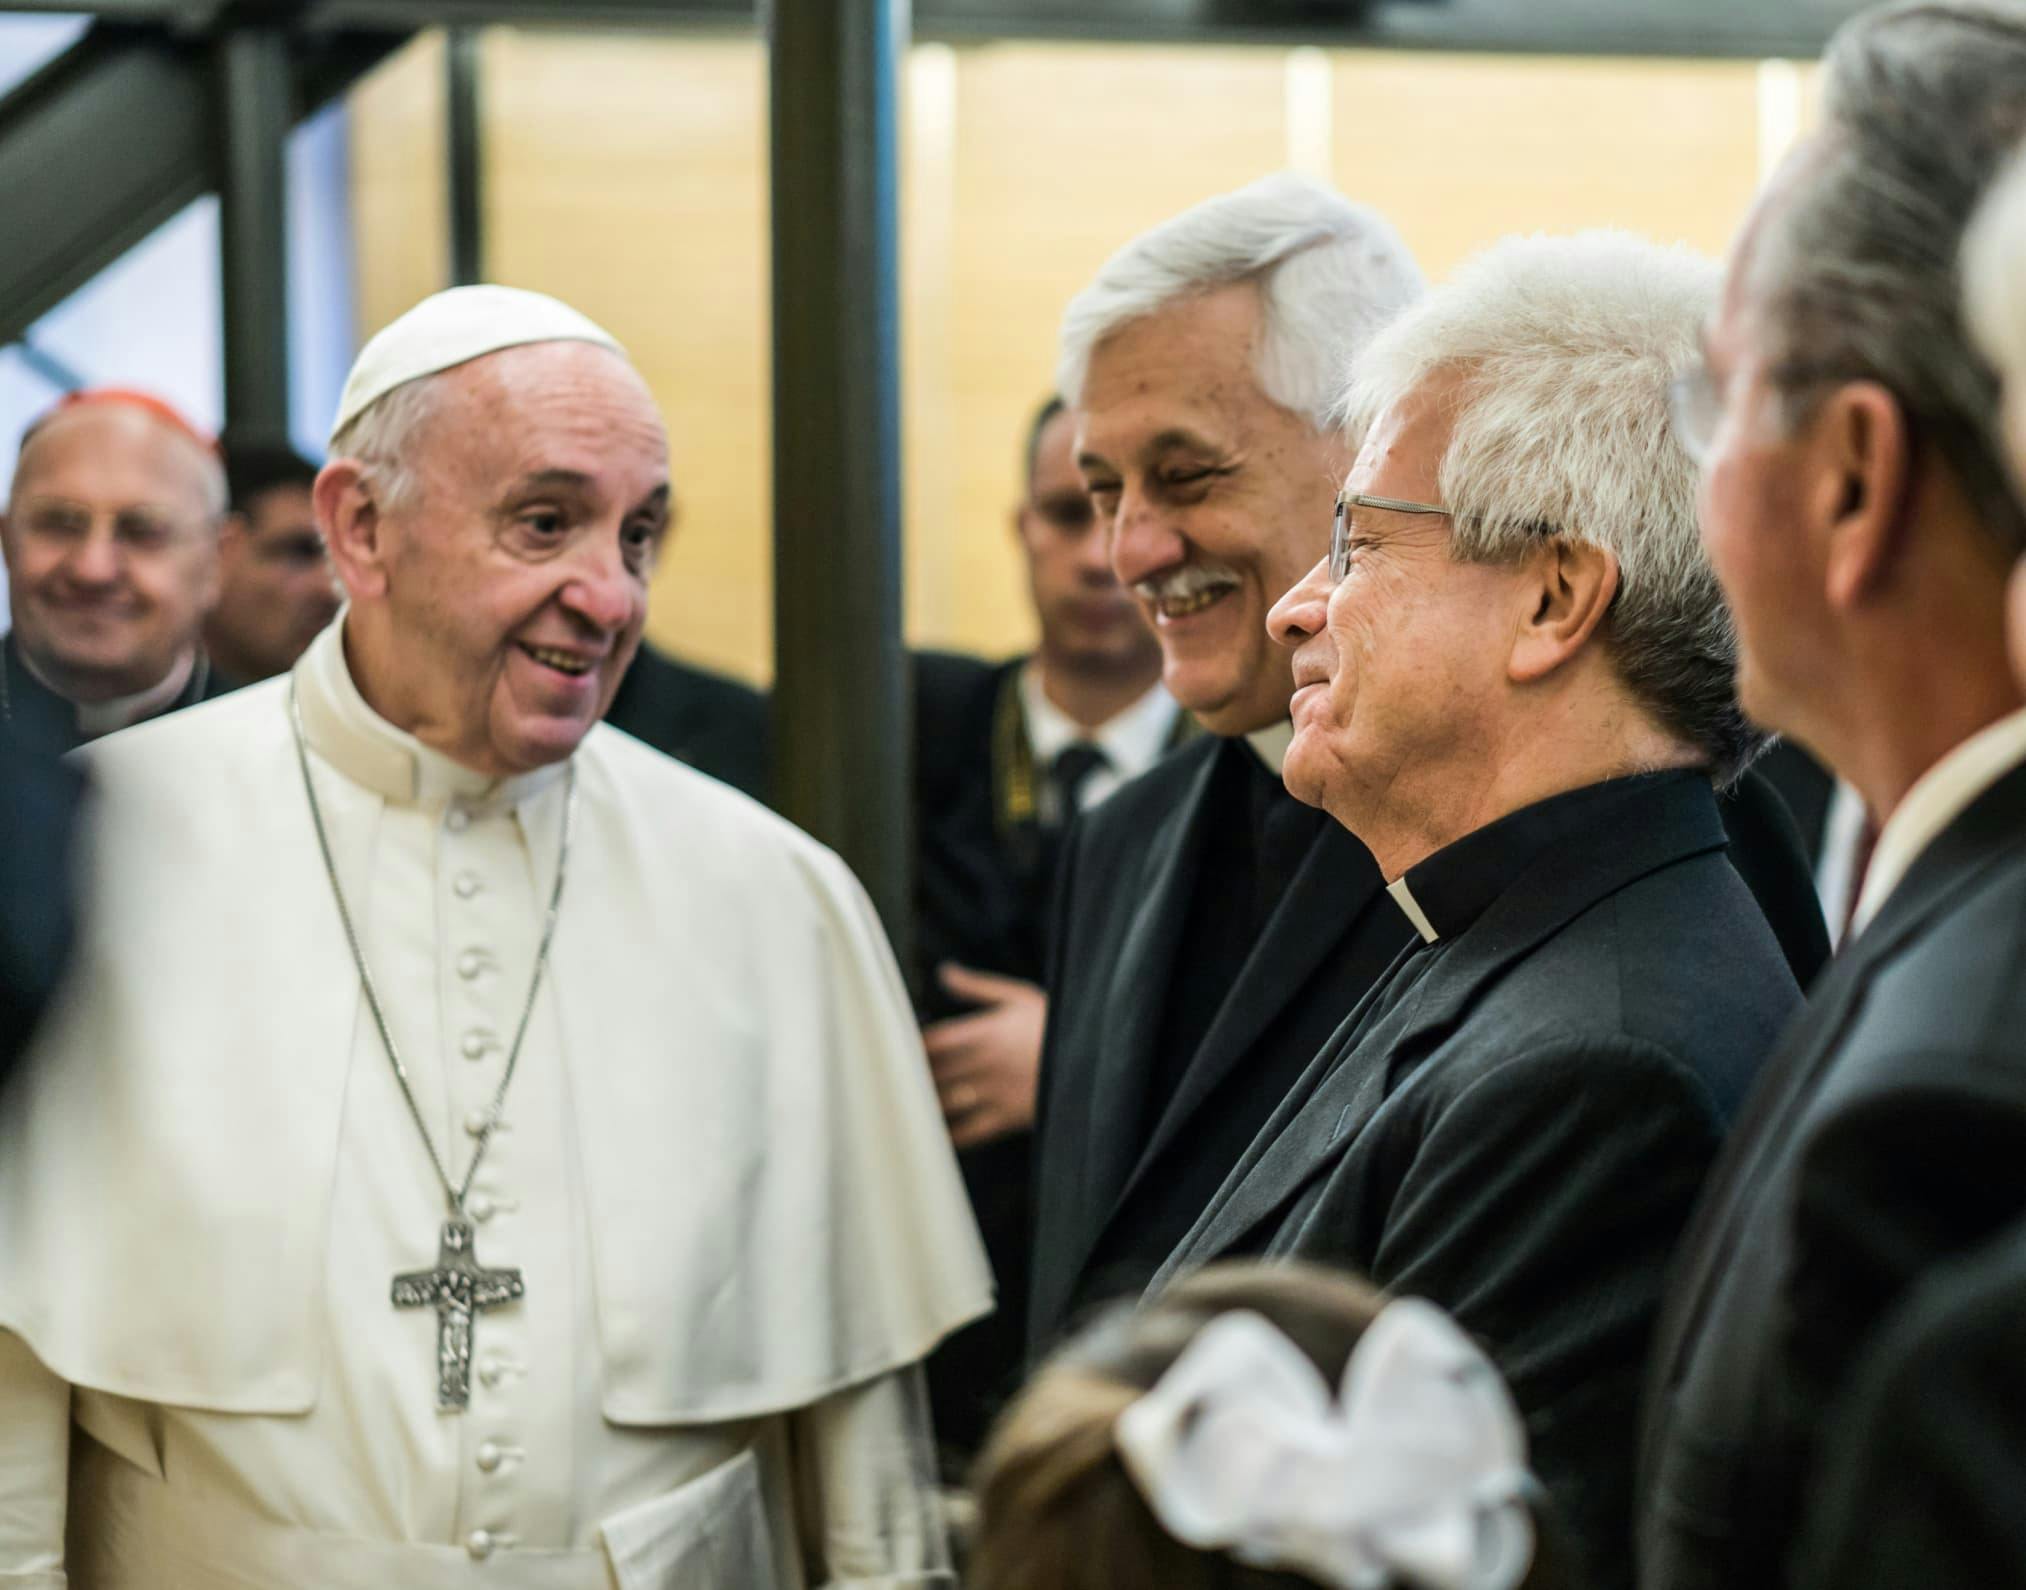 Fr. David Nazar and Pope Francis